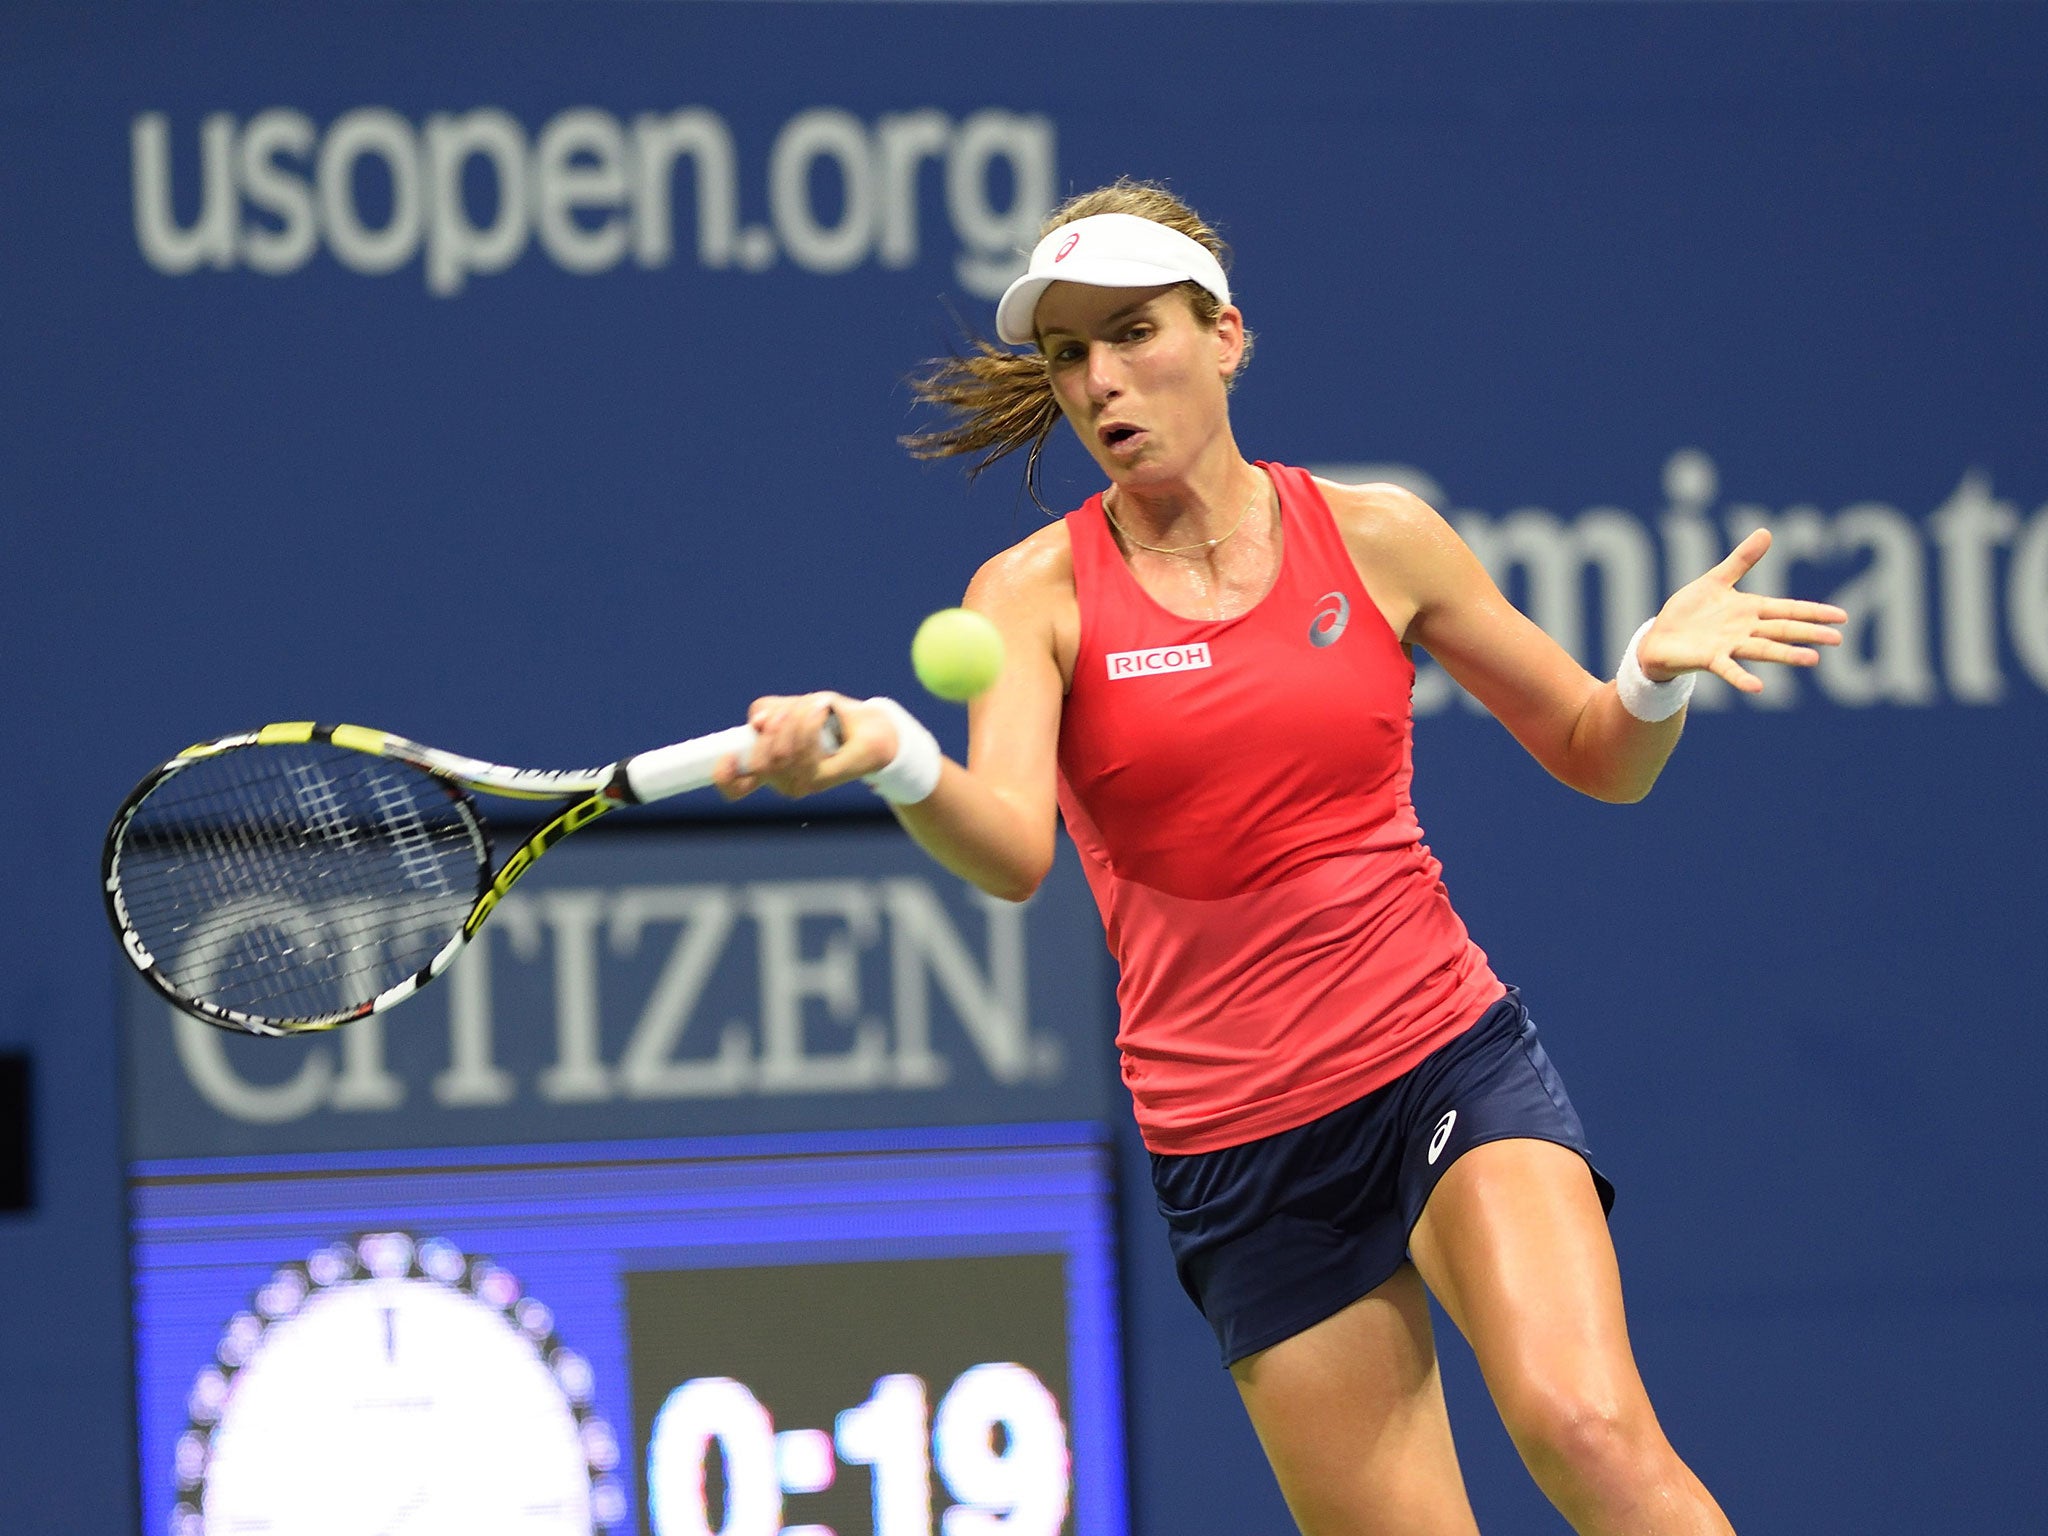 Johanna Konta suffered defeat to Petra Kvitova in the fourth round